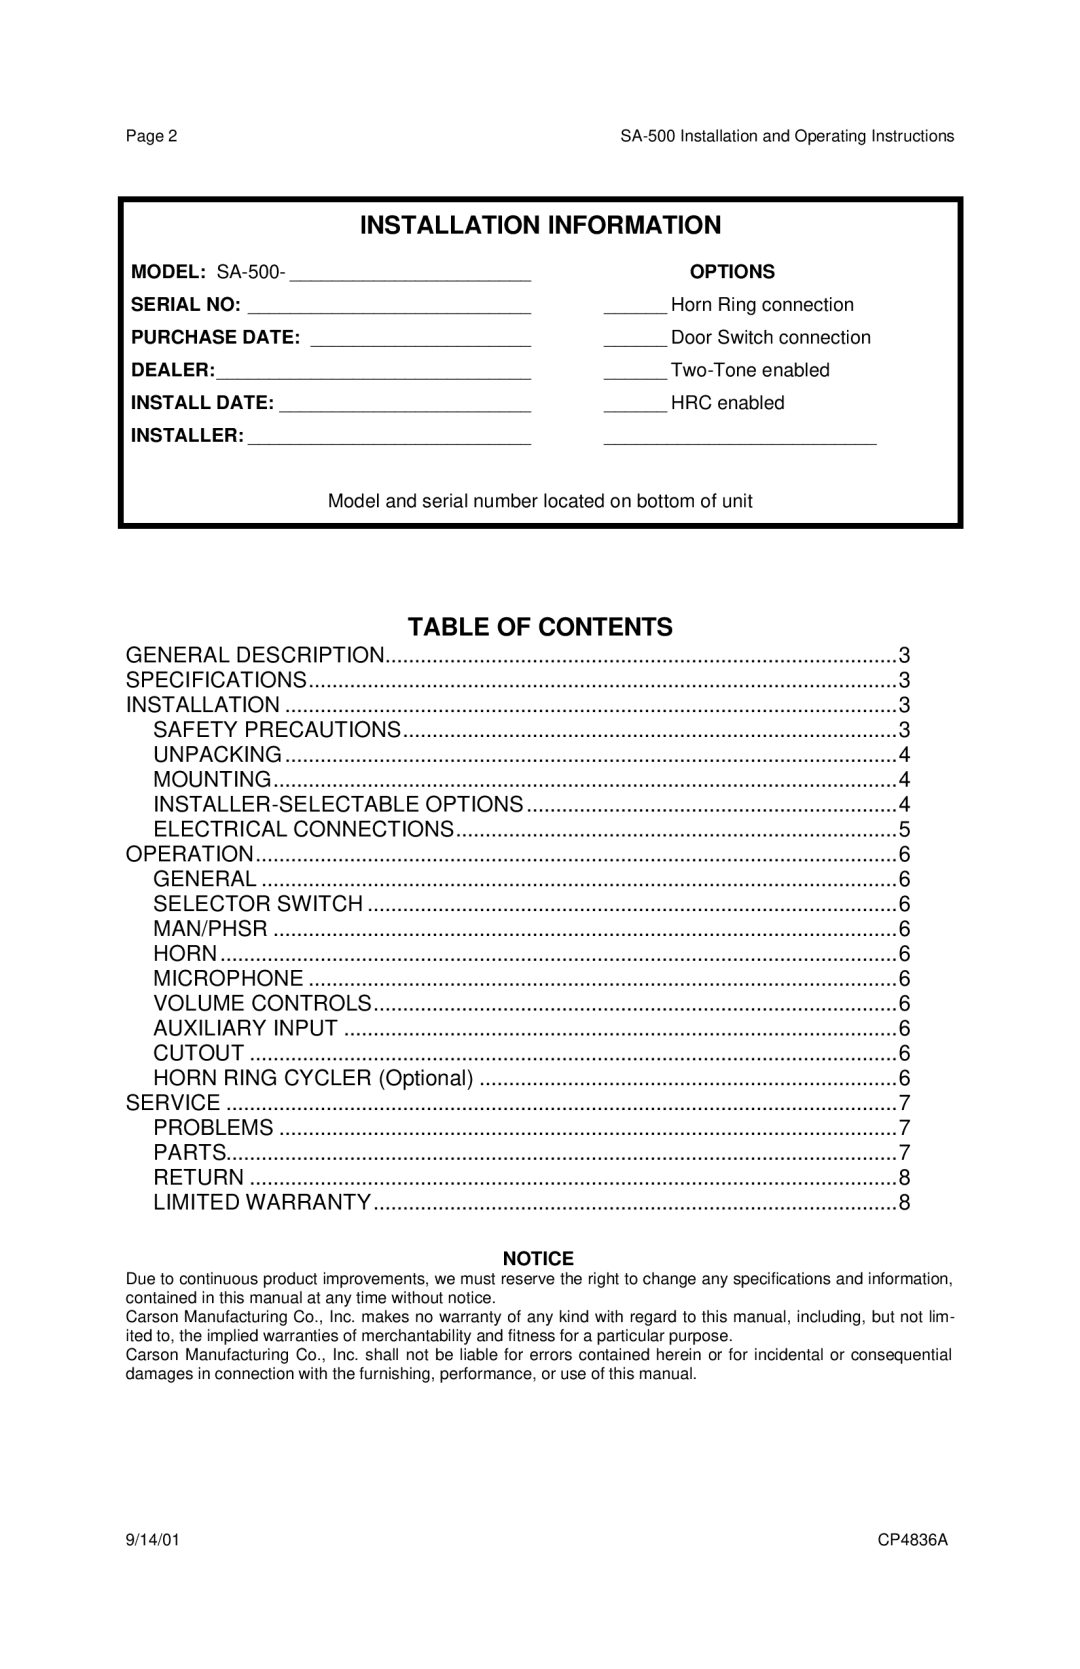 Carson Optical SA-500 manual Installation Information, Table Of Contents 